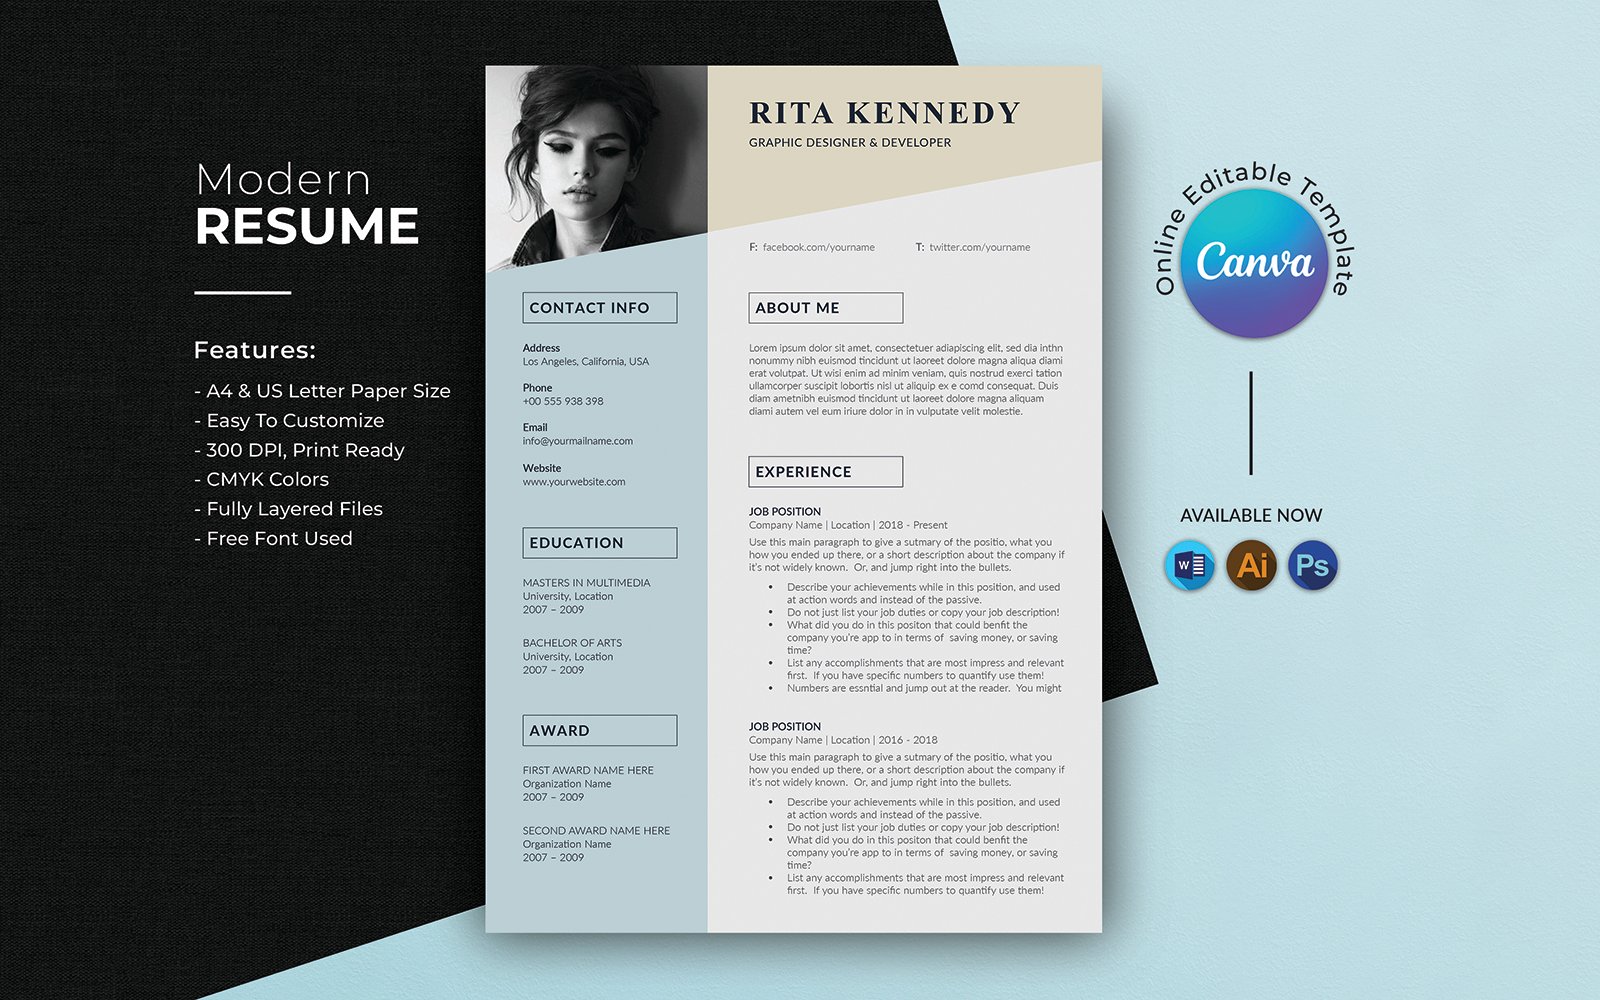 Rita Kennedy Graphic Designer & Developer Resume Template